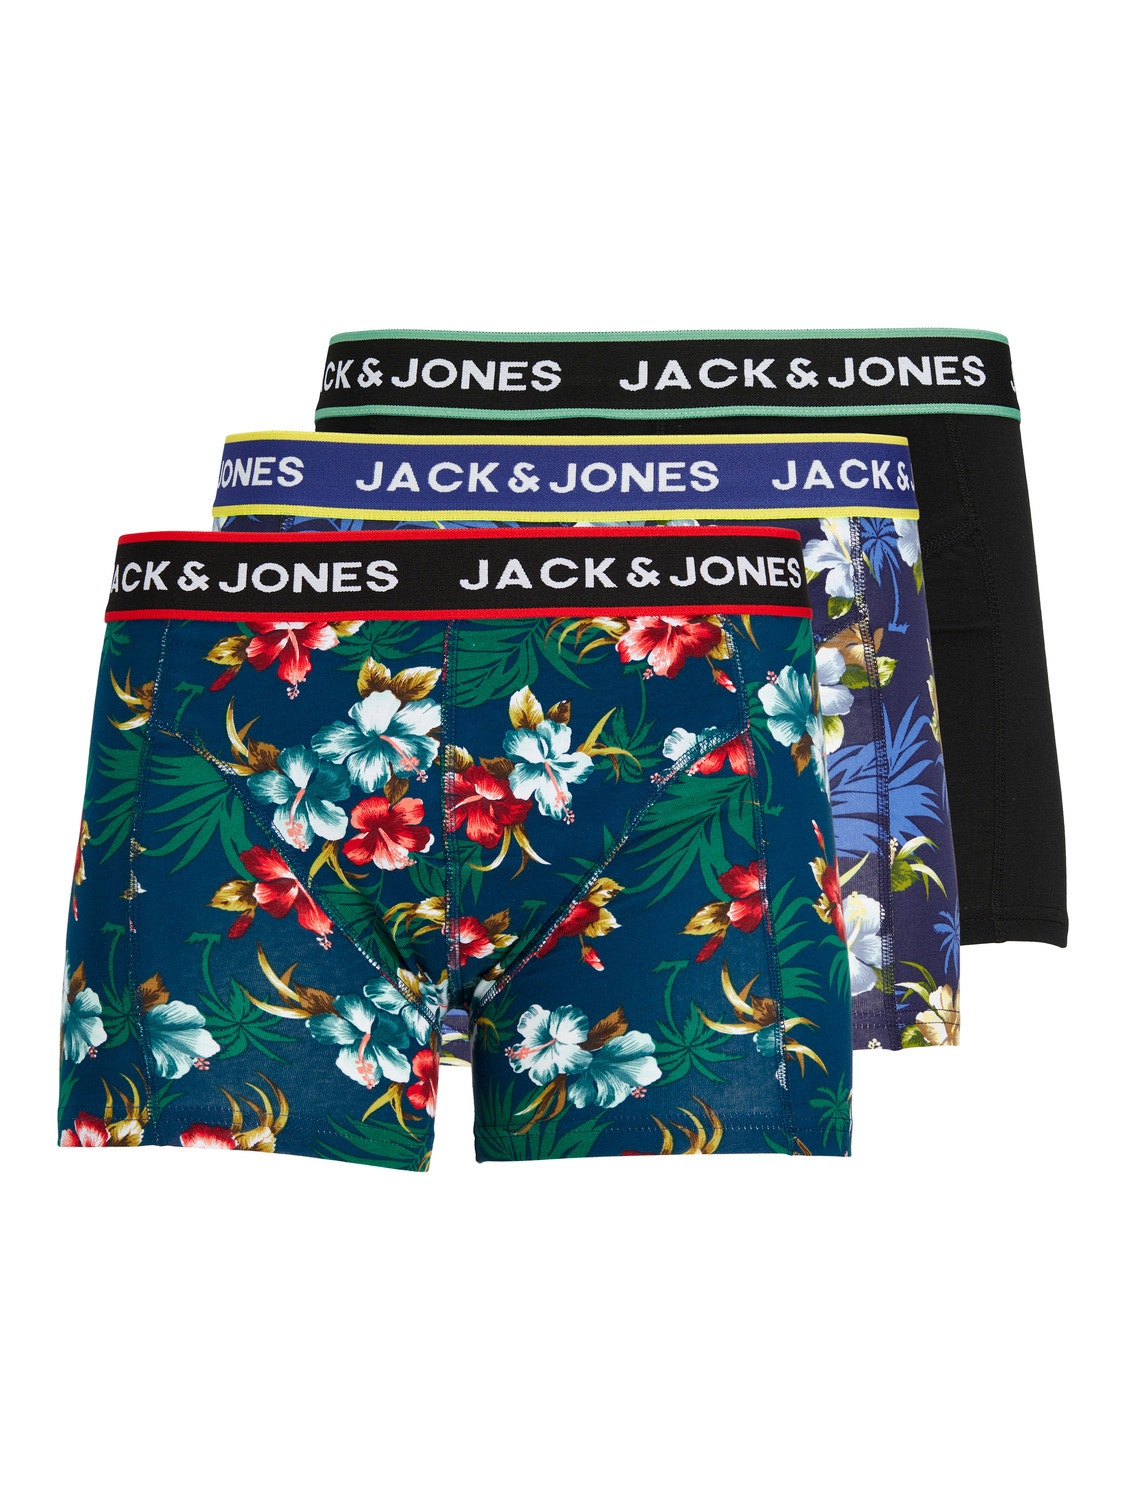 Jack & Jones 3 Trunks -Black - 12171253